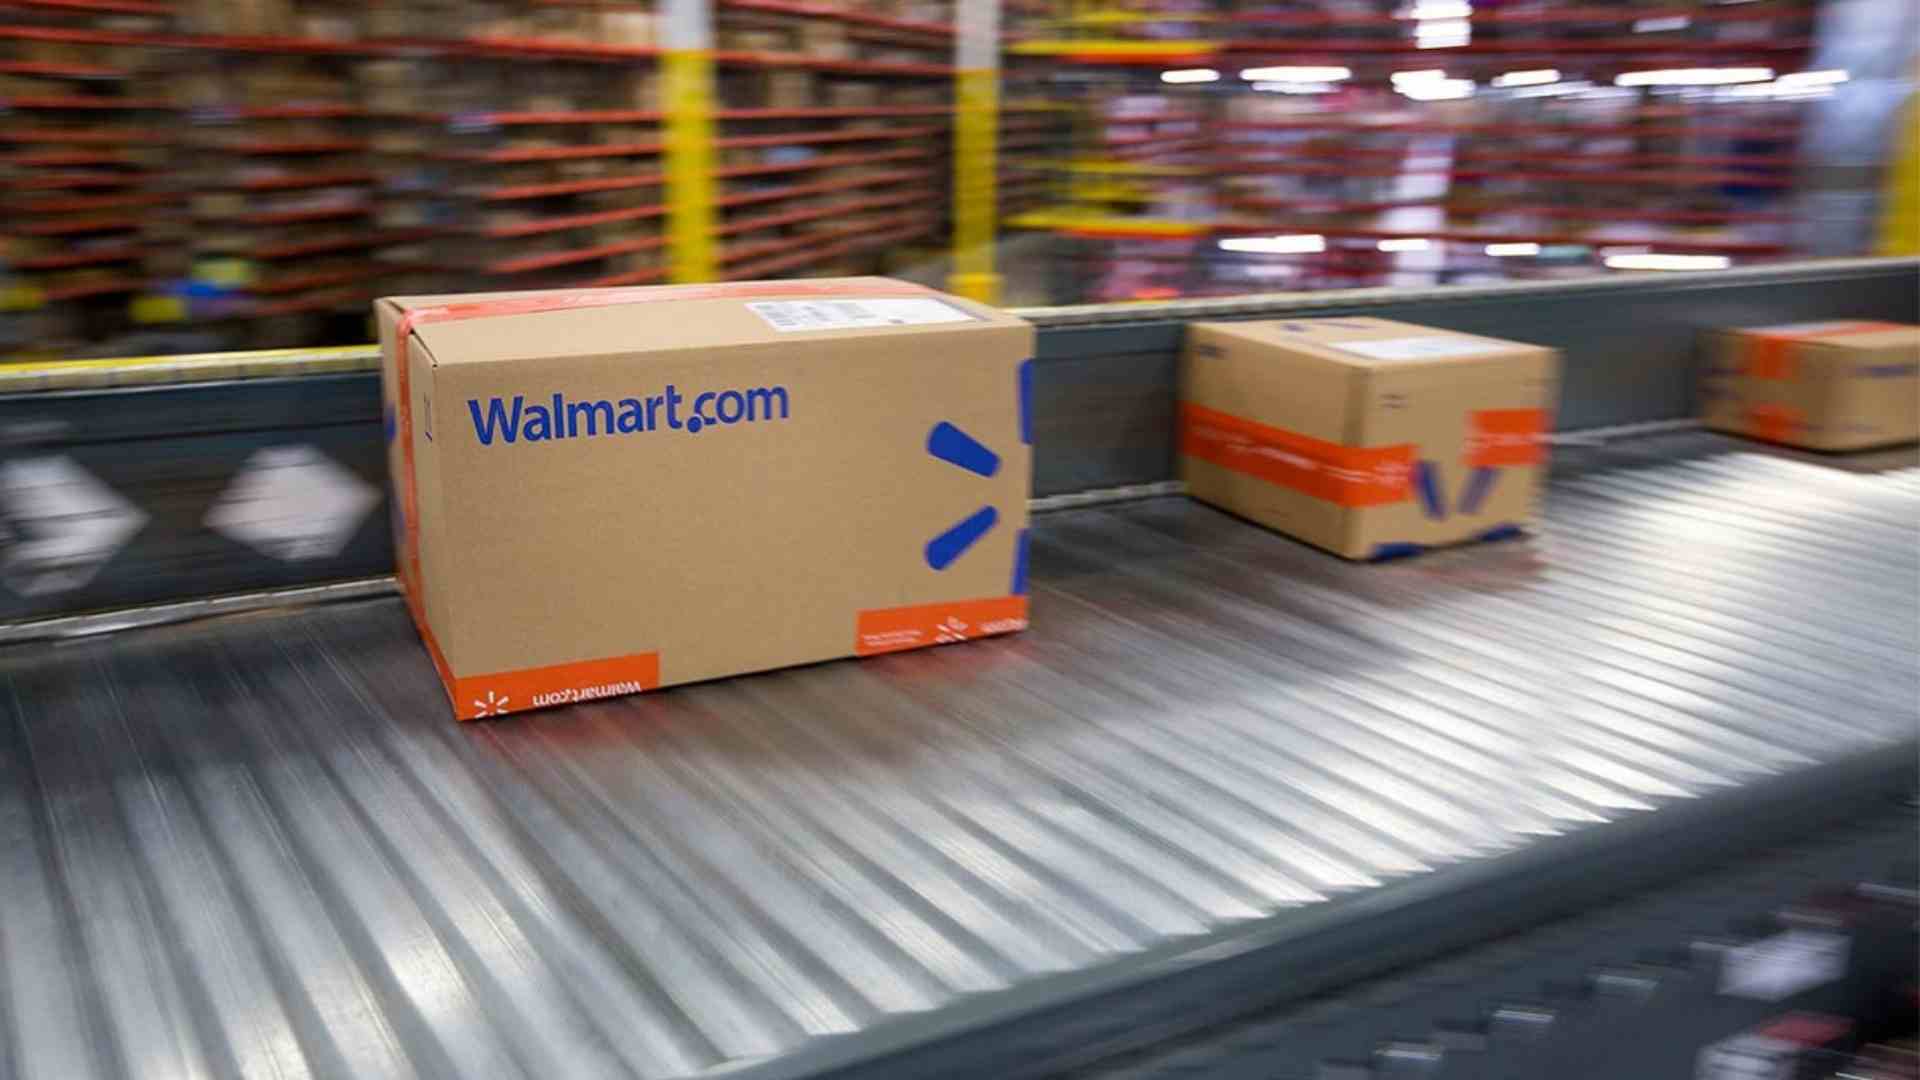 Walmart Fulfillment Services (WFS) Guide